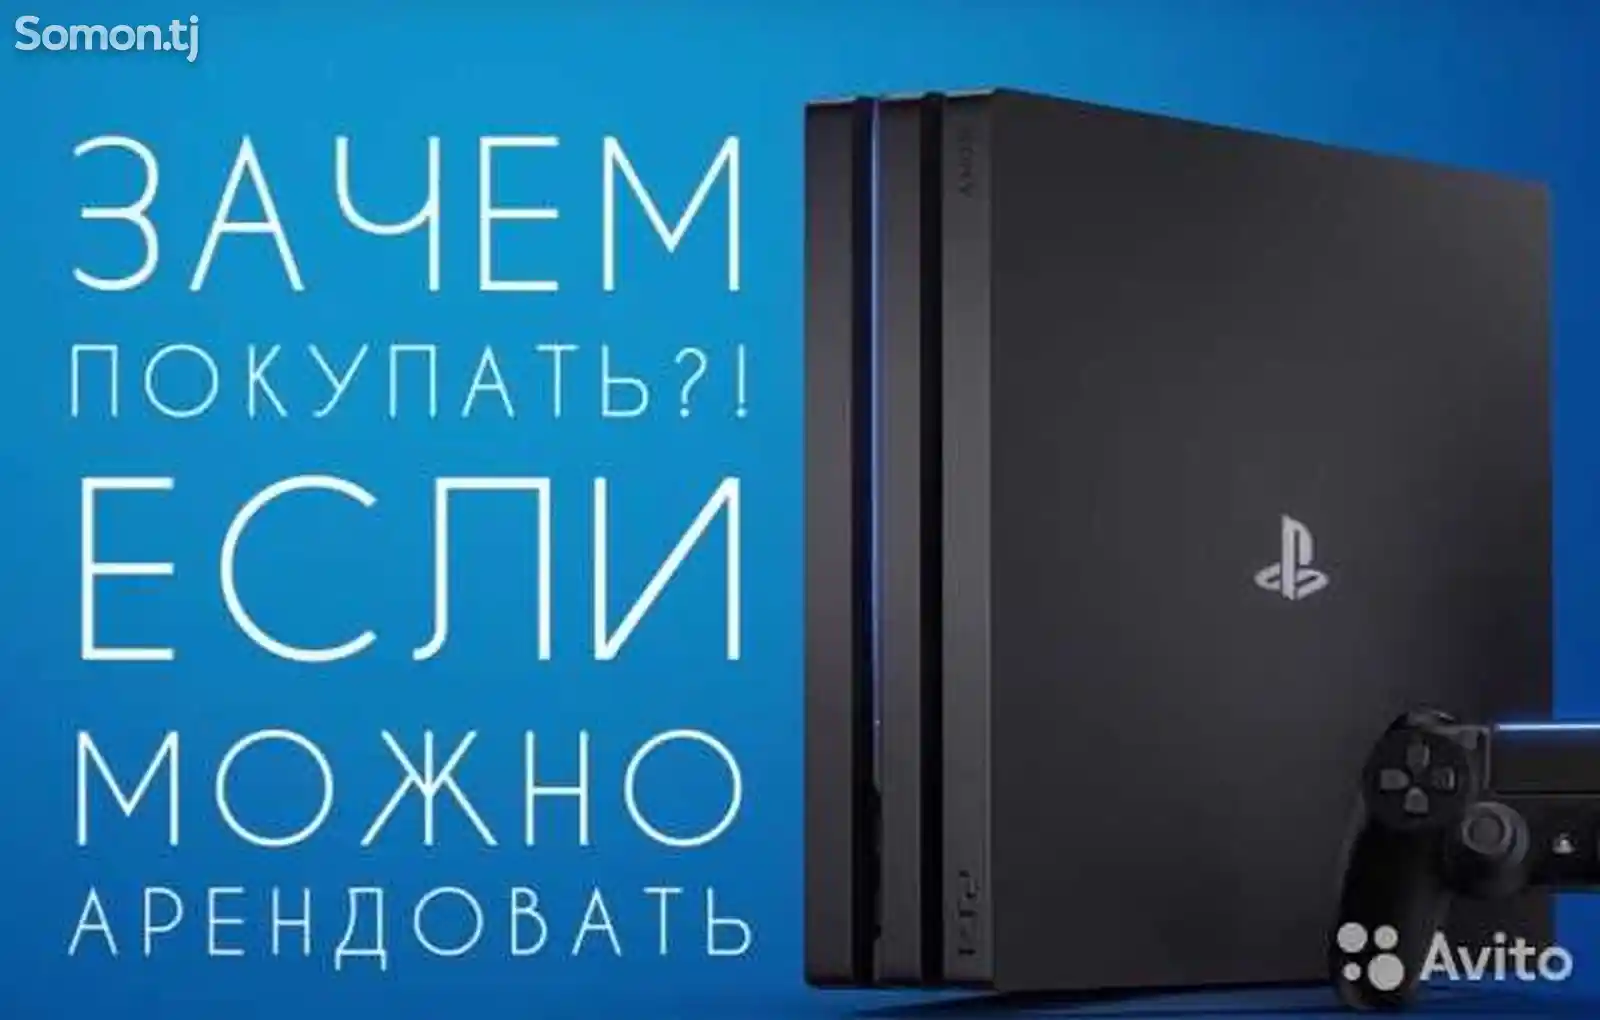 Sony Playstation 4 на прокат